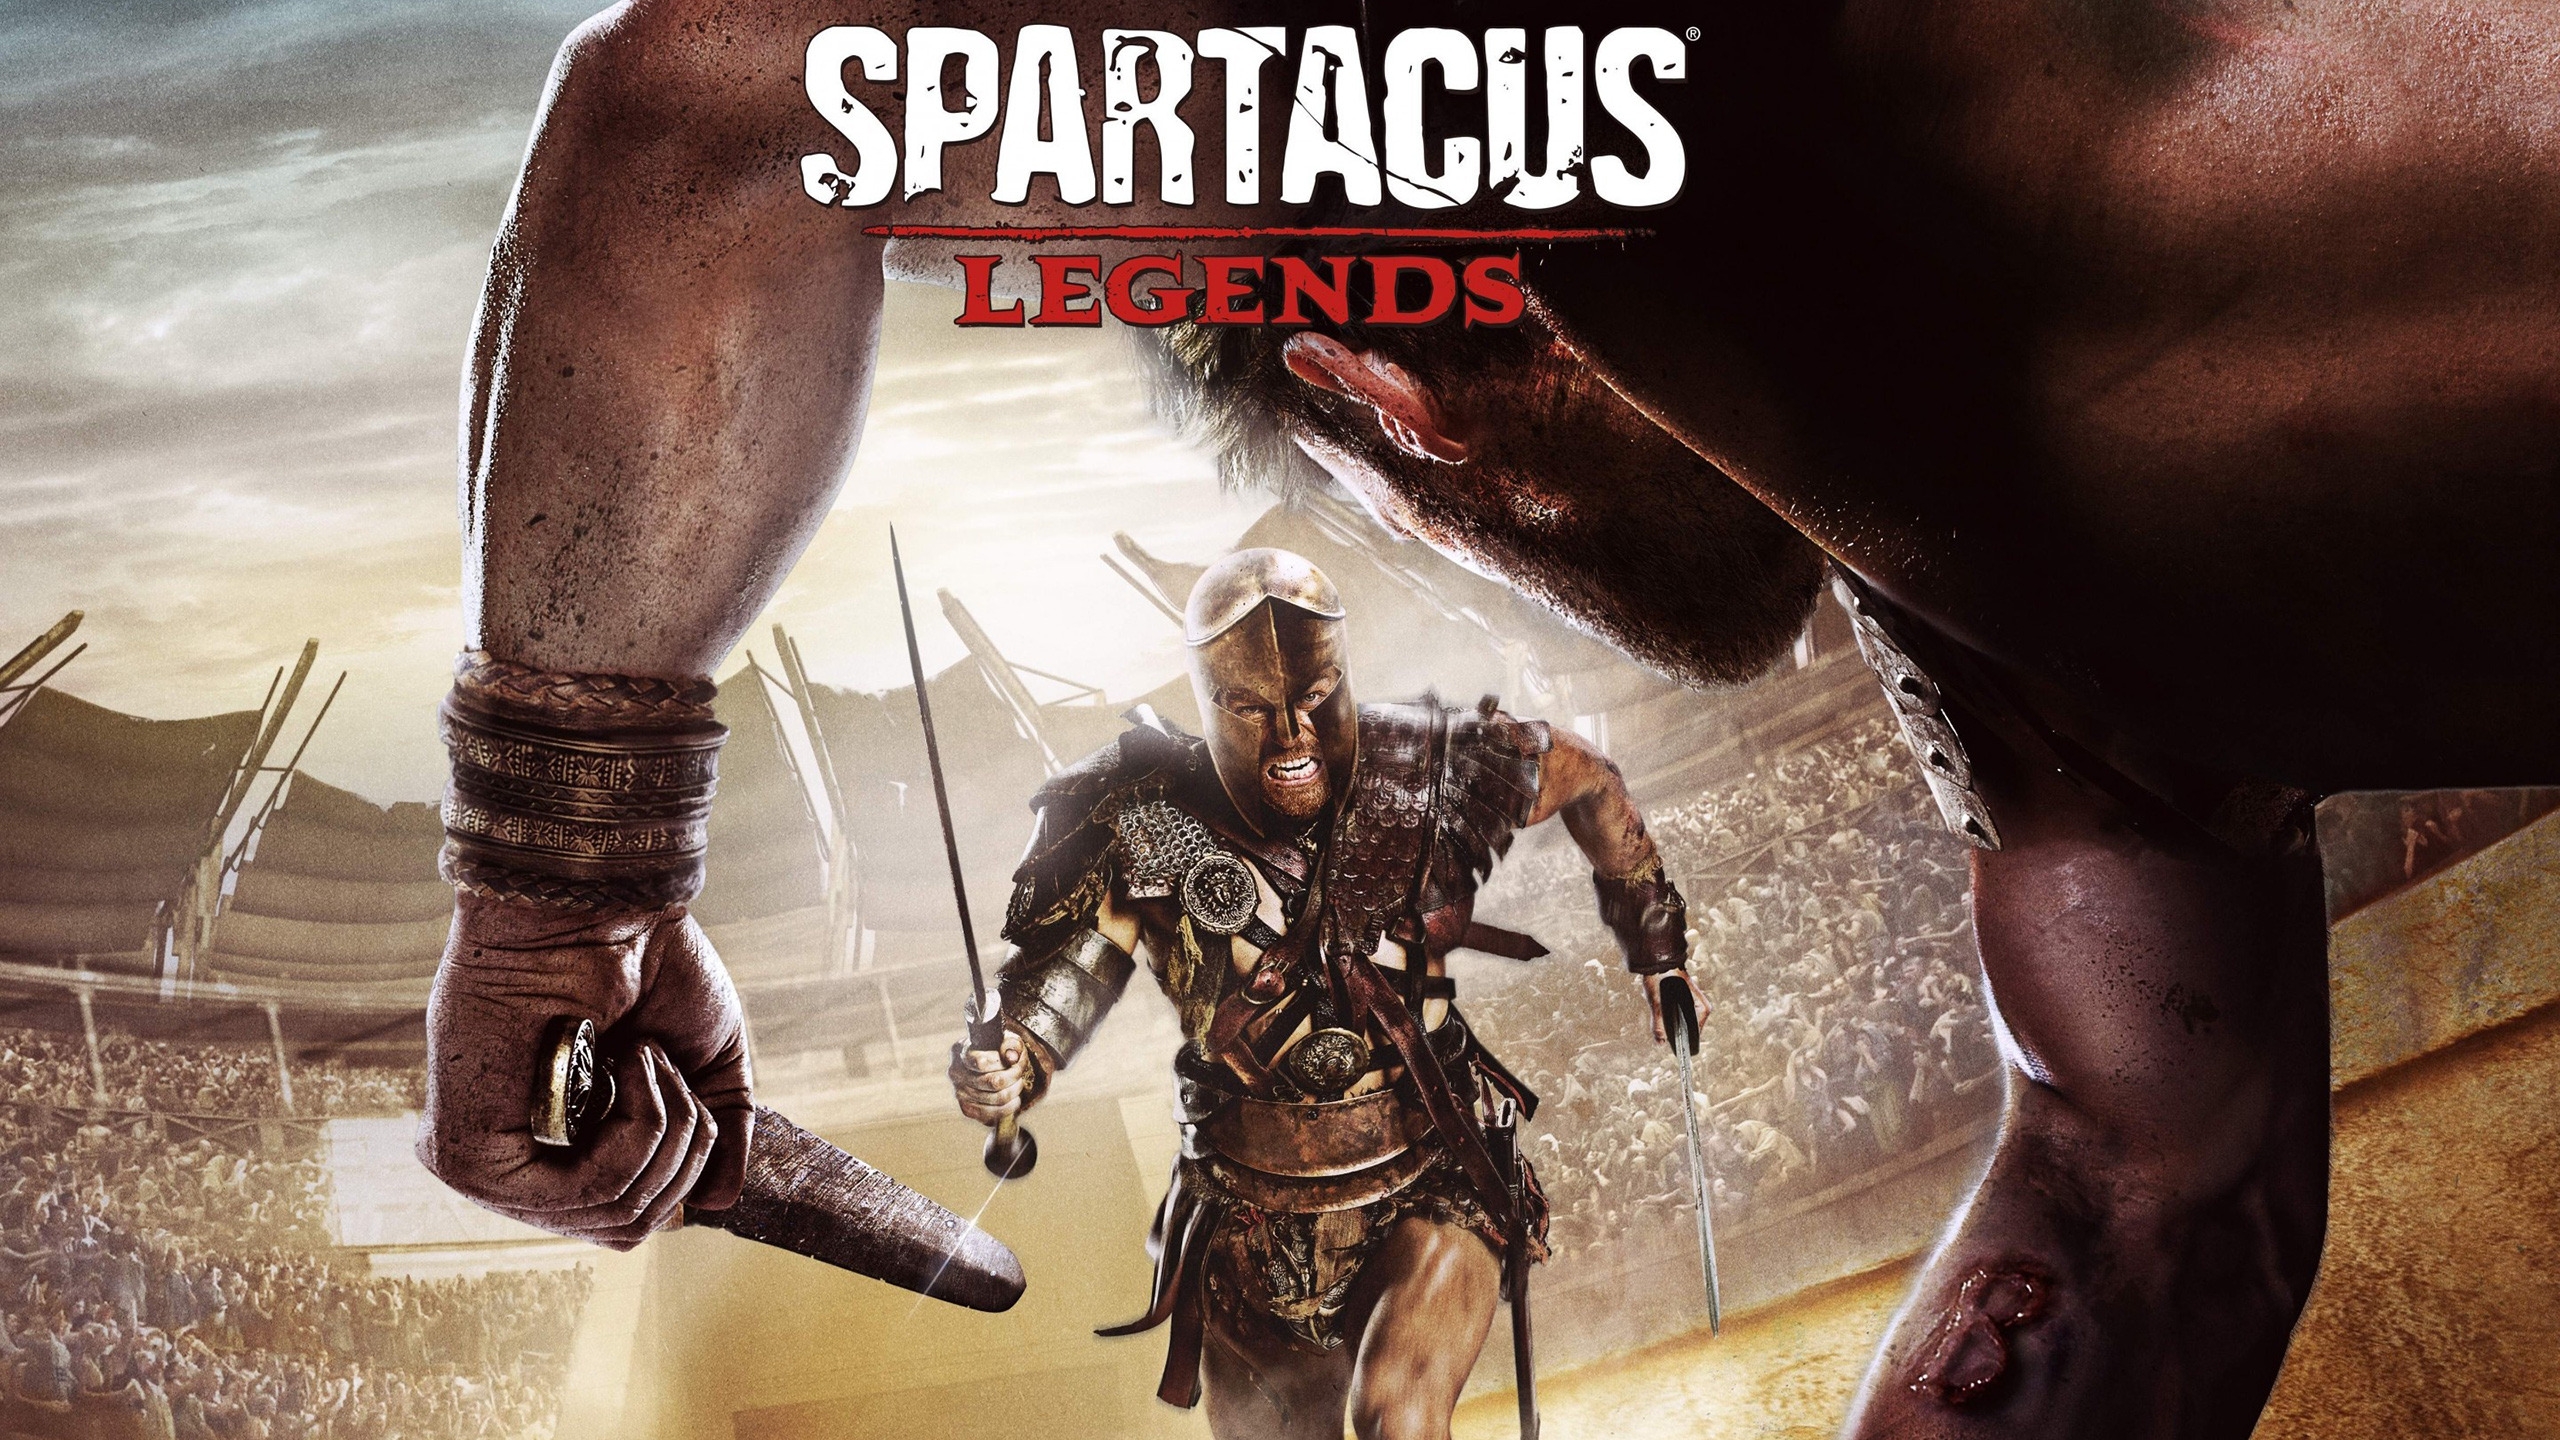 Spartacus Legends for 2560x1440 HDTV resolution